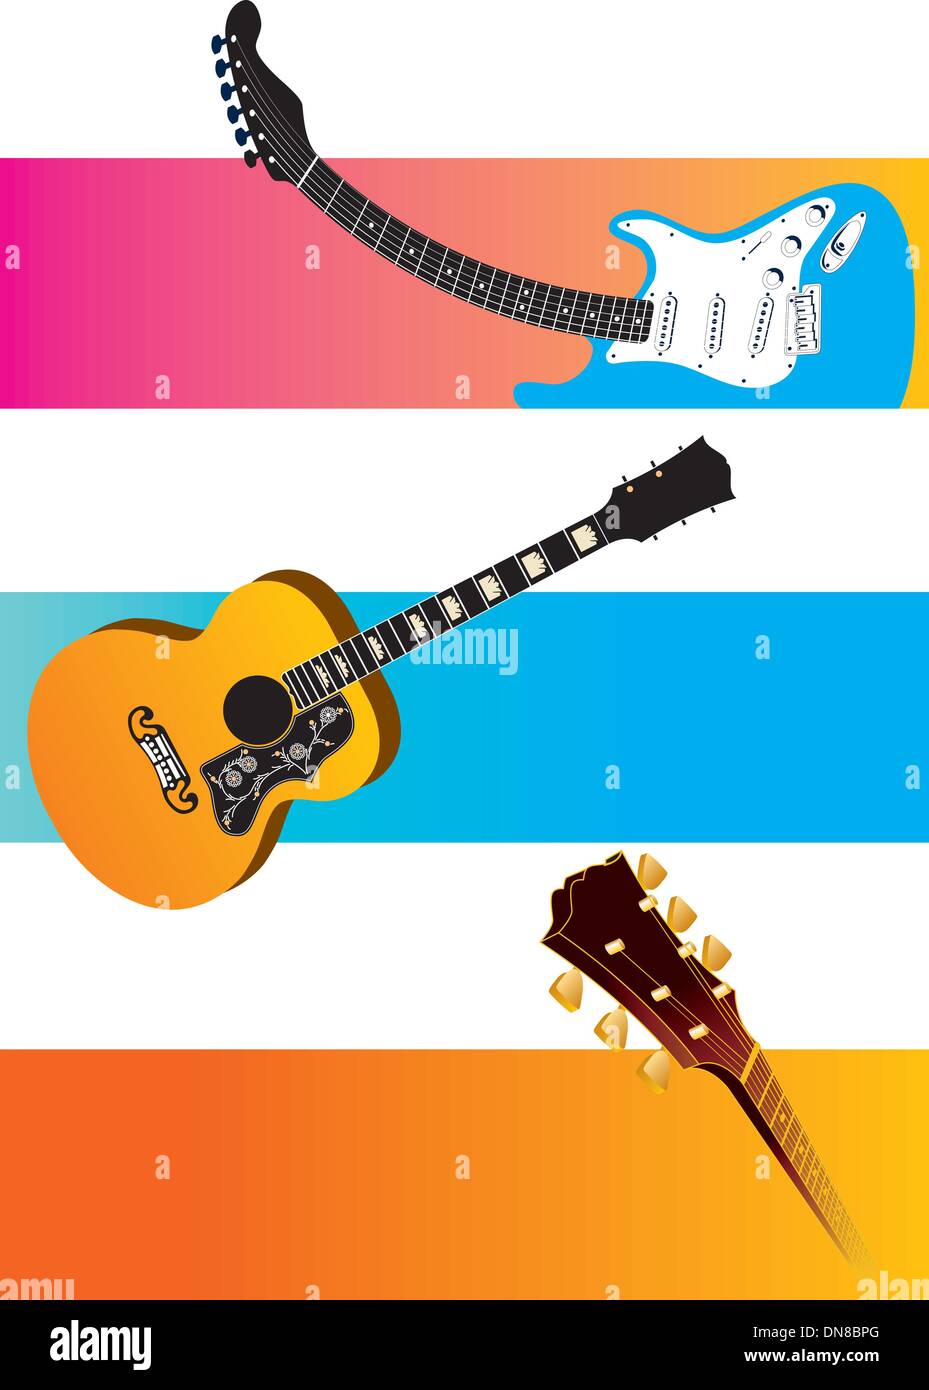 Guitar Vector Banner Design template Stock Vector